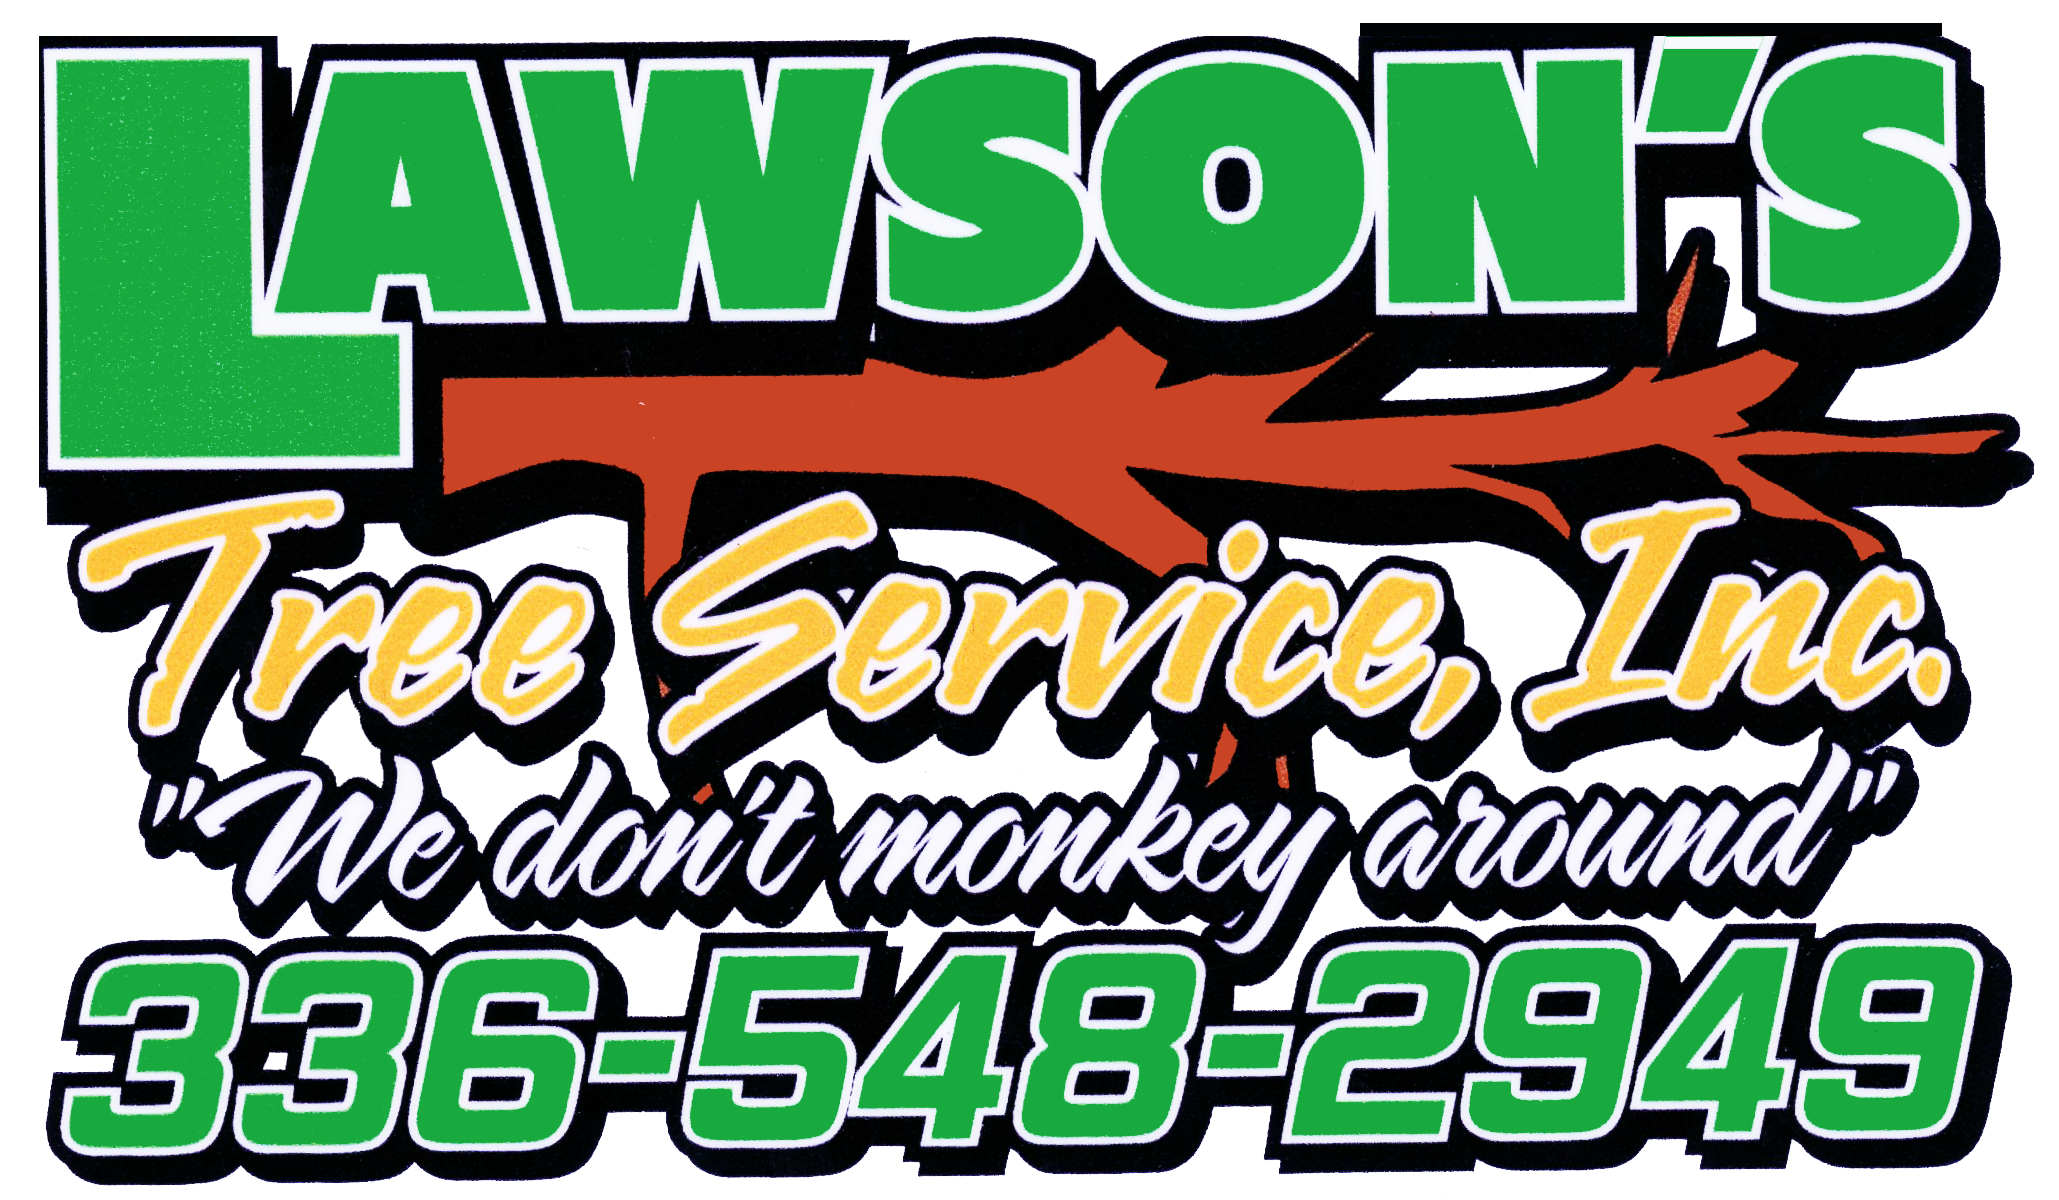 Lawson's Tree Services